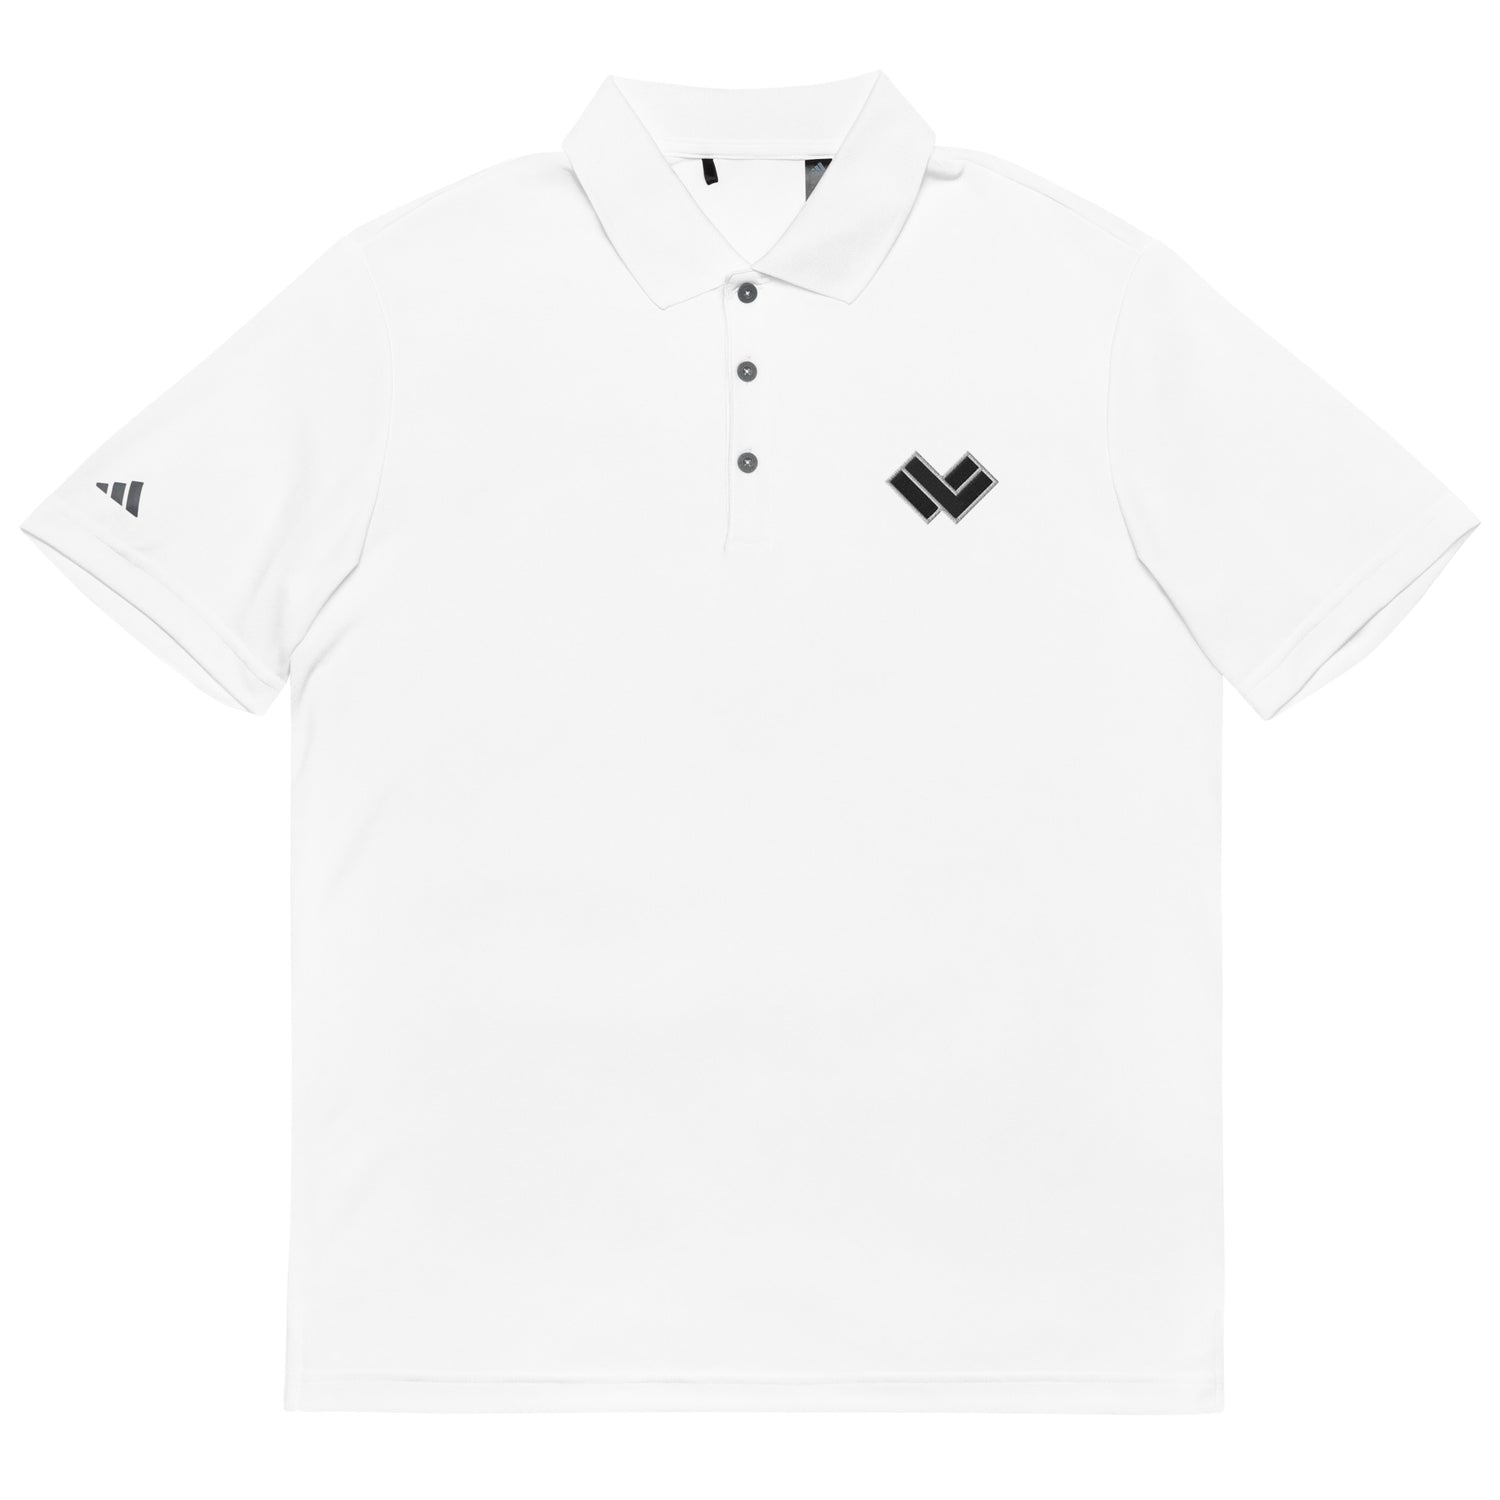 LAX World - Adidas Performance White Lacrosse Polo Shirt - Front 